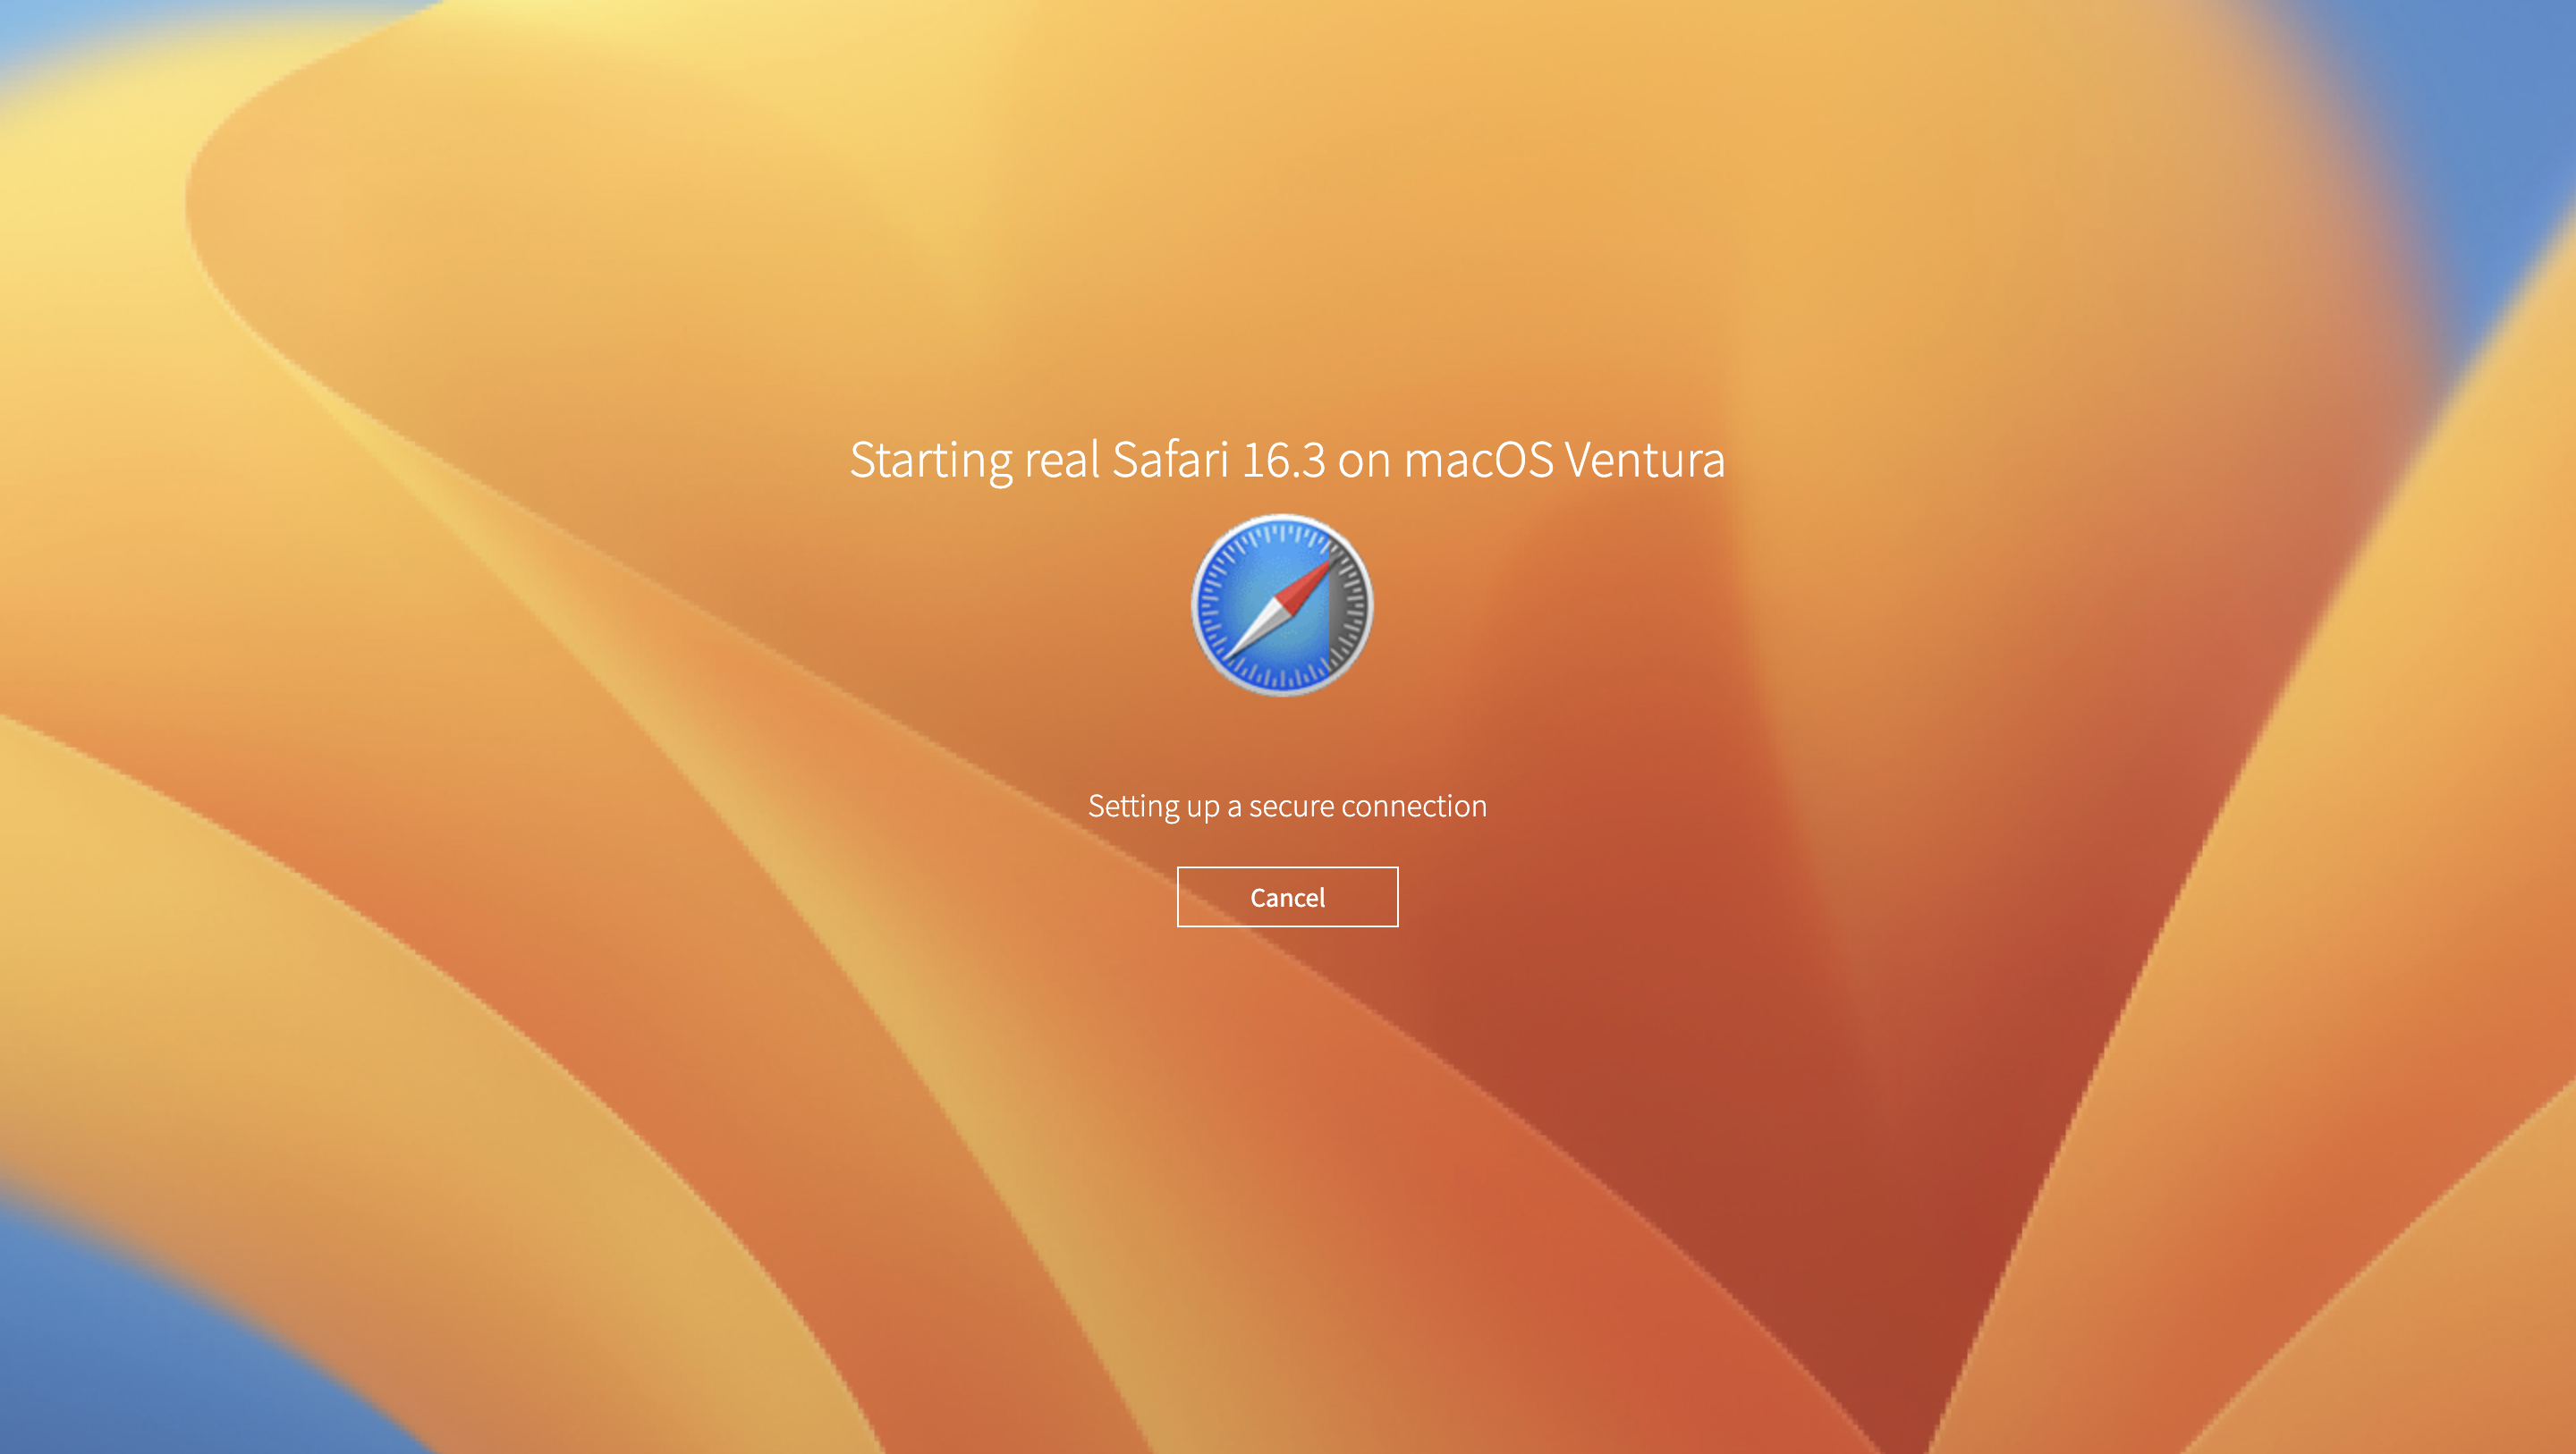 Live testing Safari 16.3 on macOS Ventura